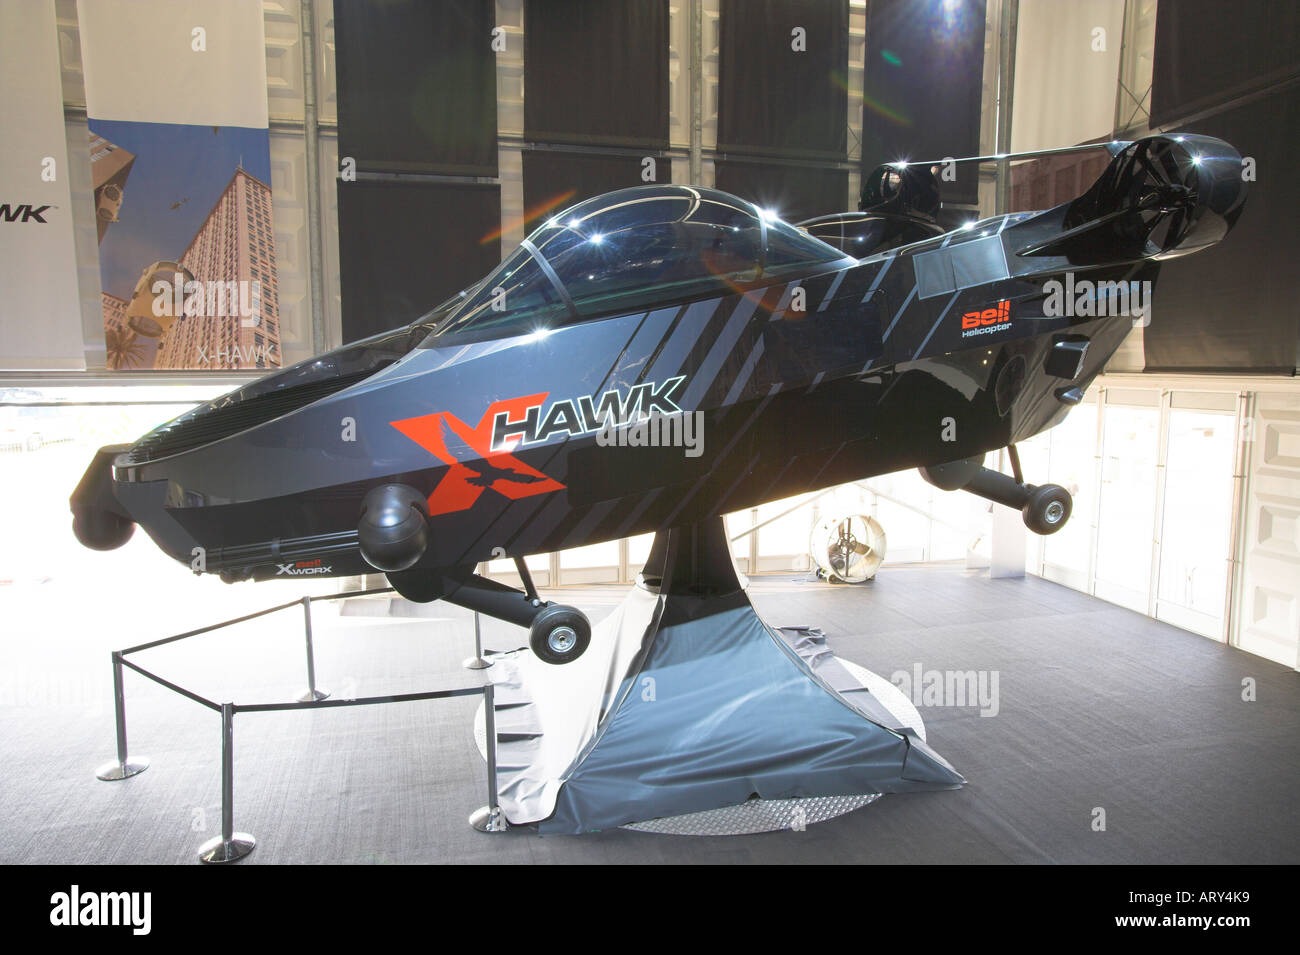 The X-Hawk™ Experimentalfahrzeug Backbordseite Stockfoto